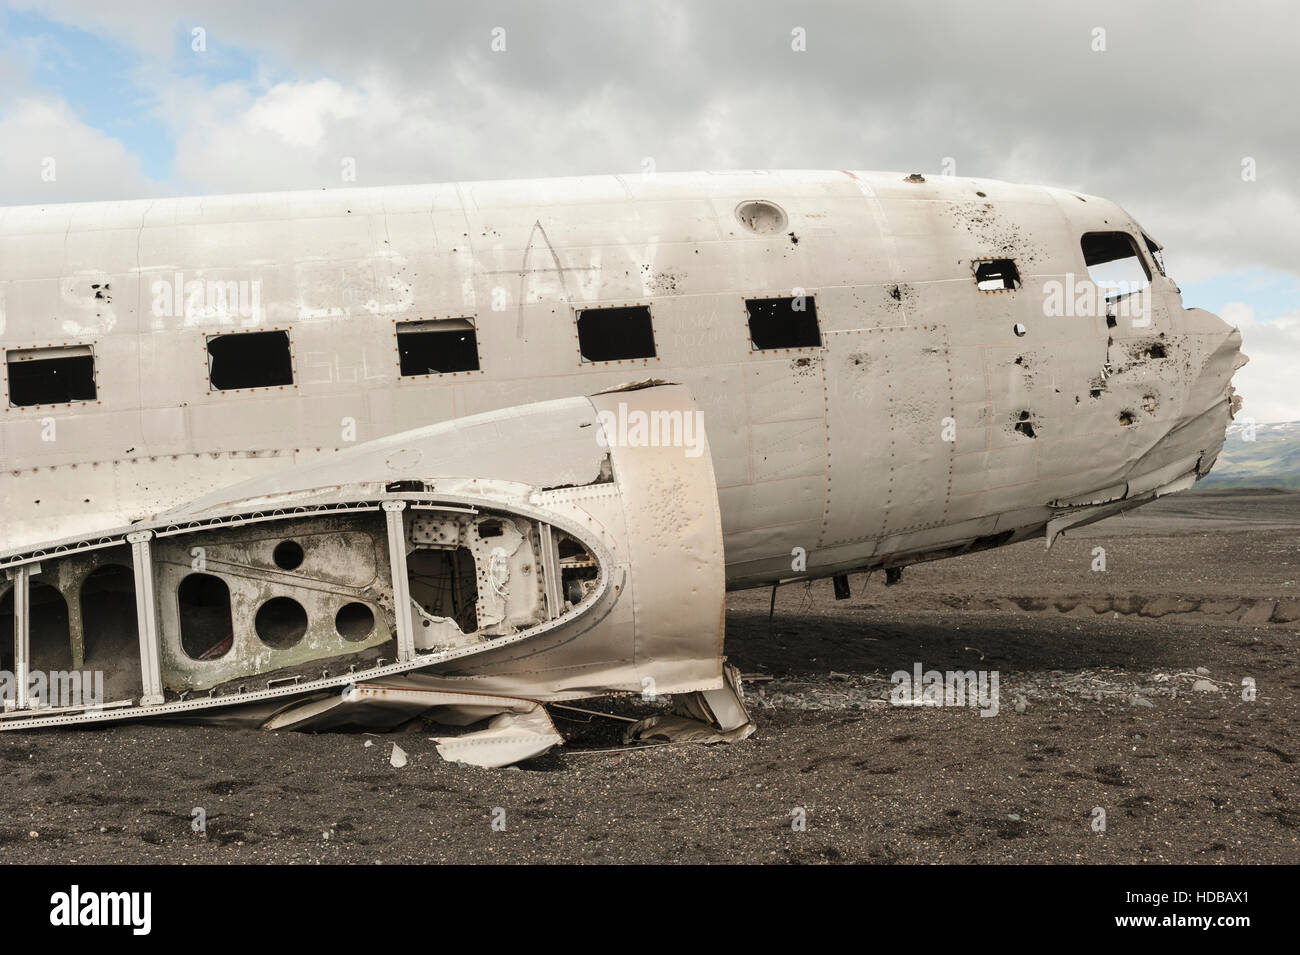 Iceland - Solheimasandur United States Navy DC-3 aeroplane wreck side view. Stock Photo